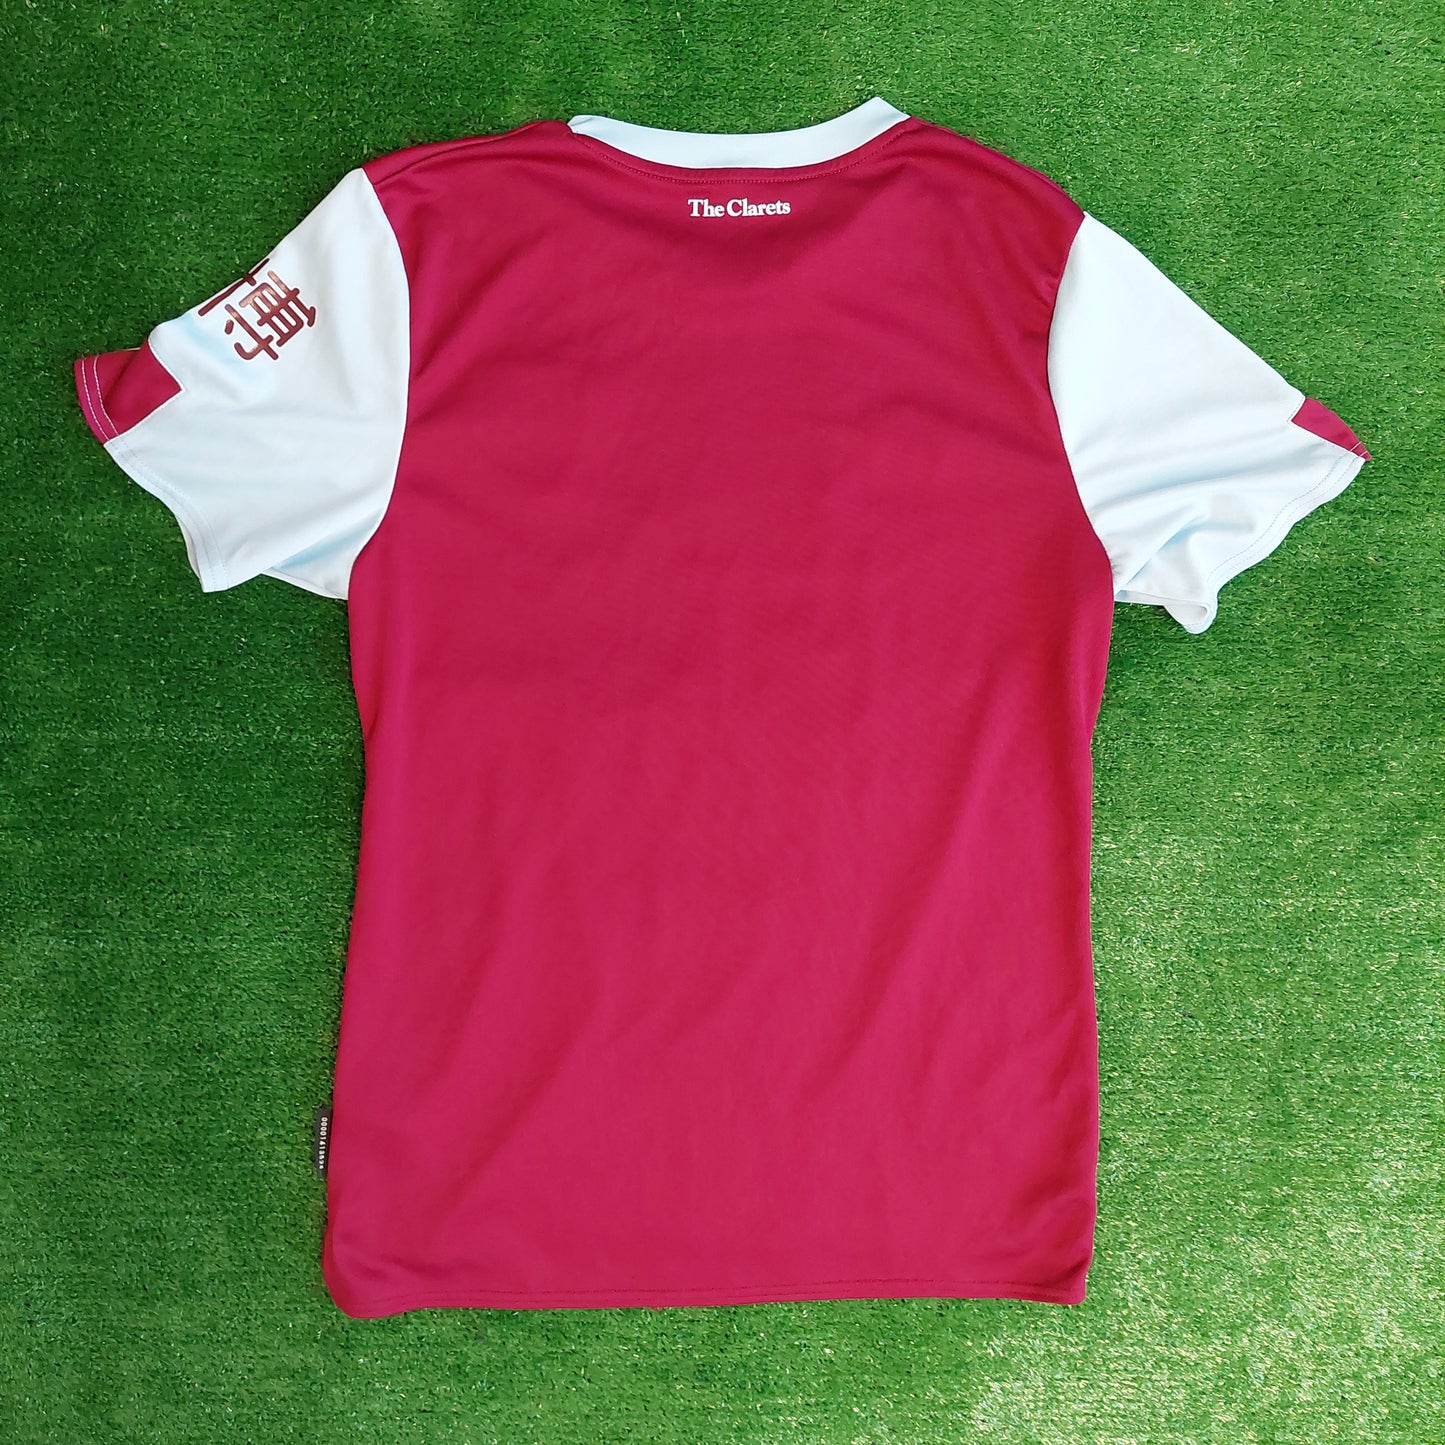 Burnley 2019/20 Home Shirt (Very Good) - Size S